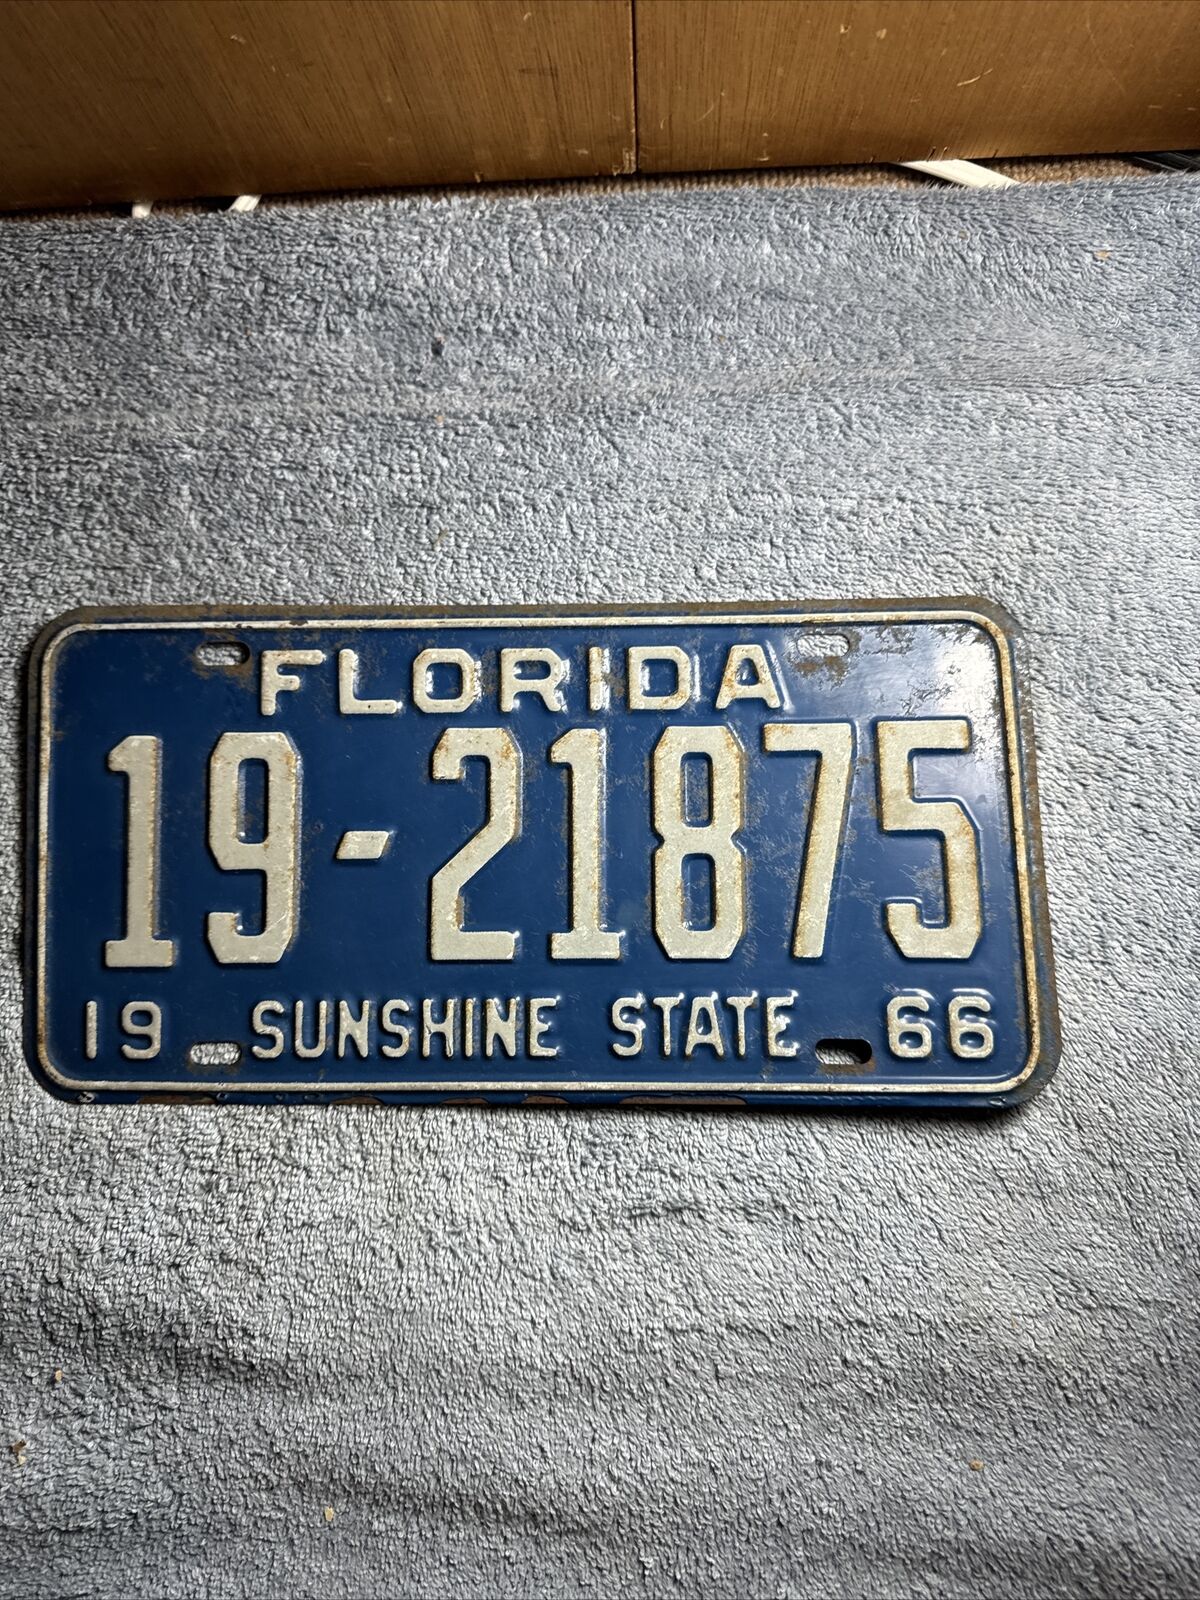 1966 Florida License Plate 19-21875 Sunshine State